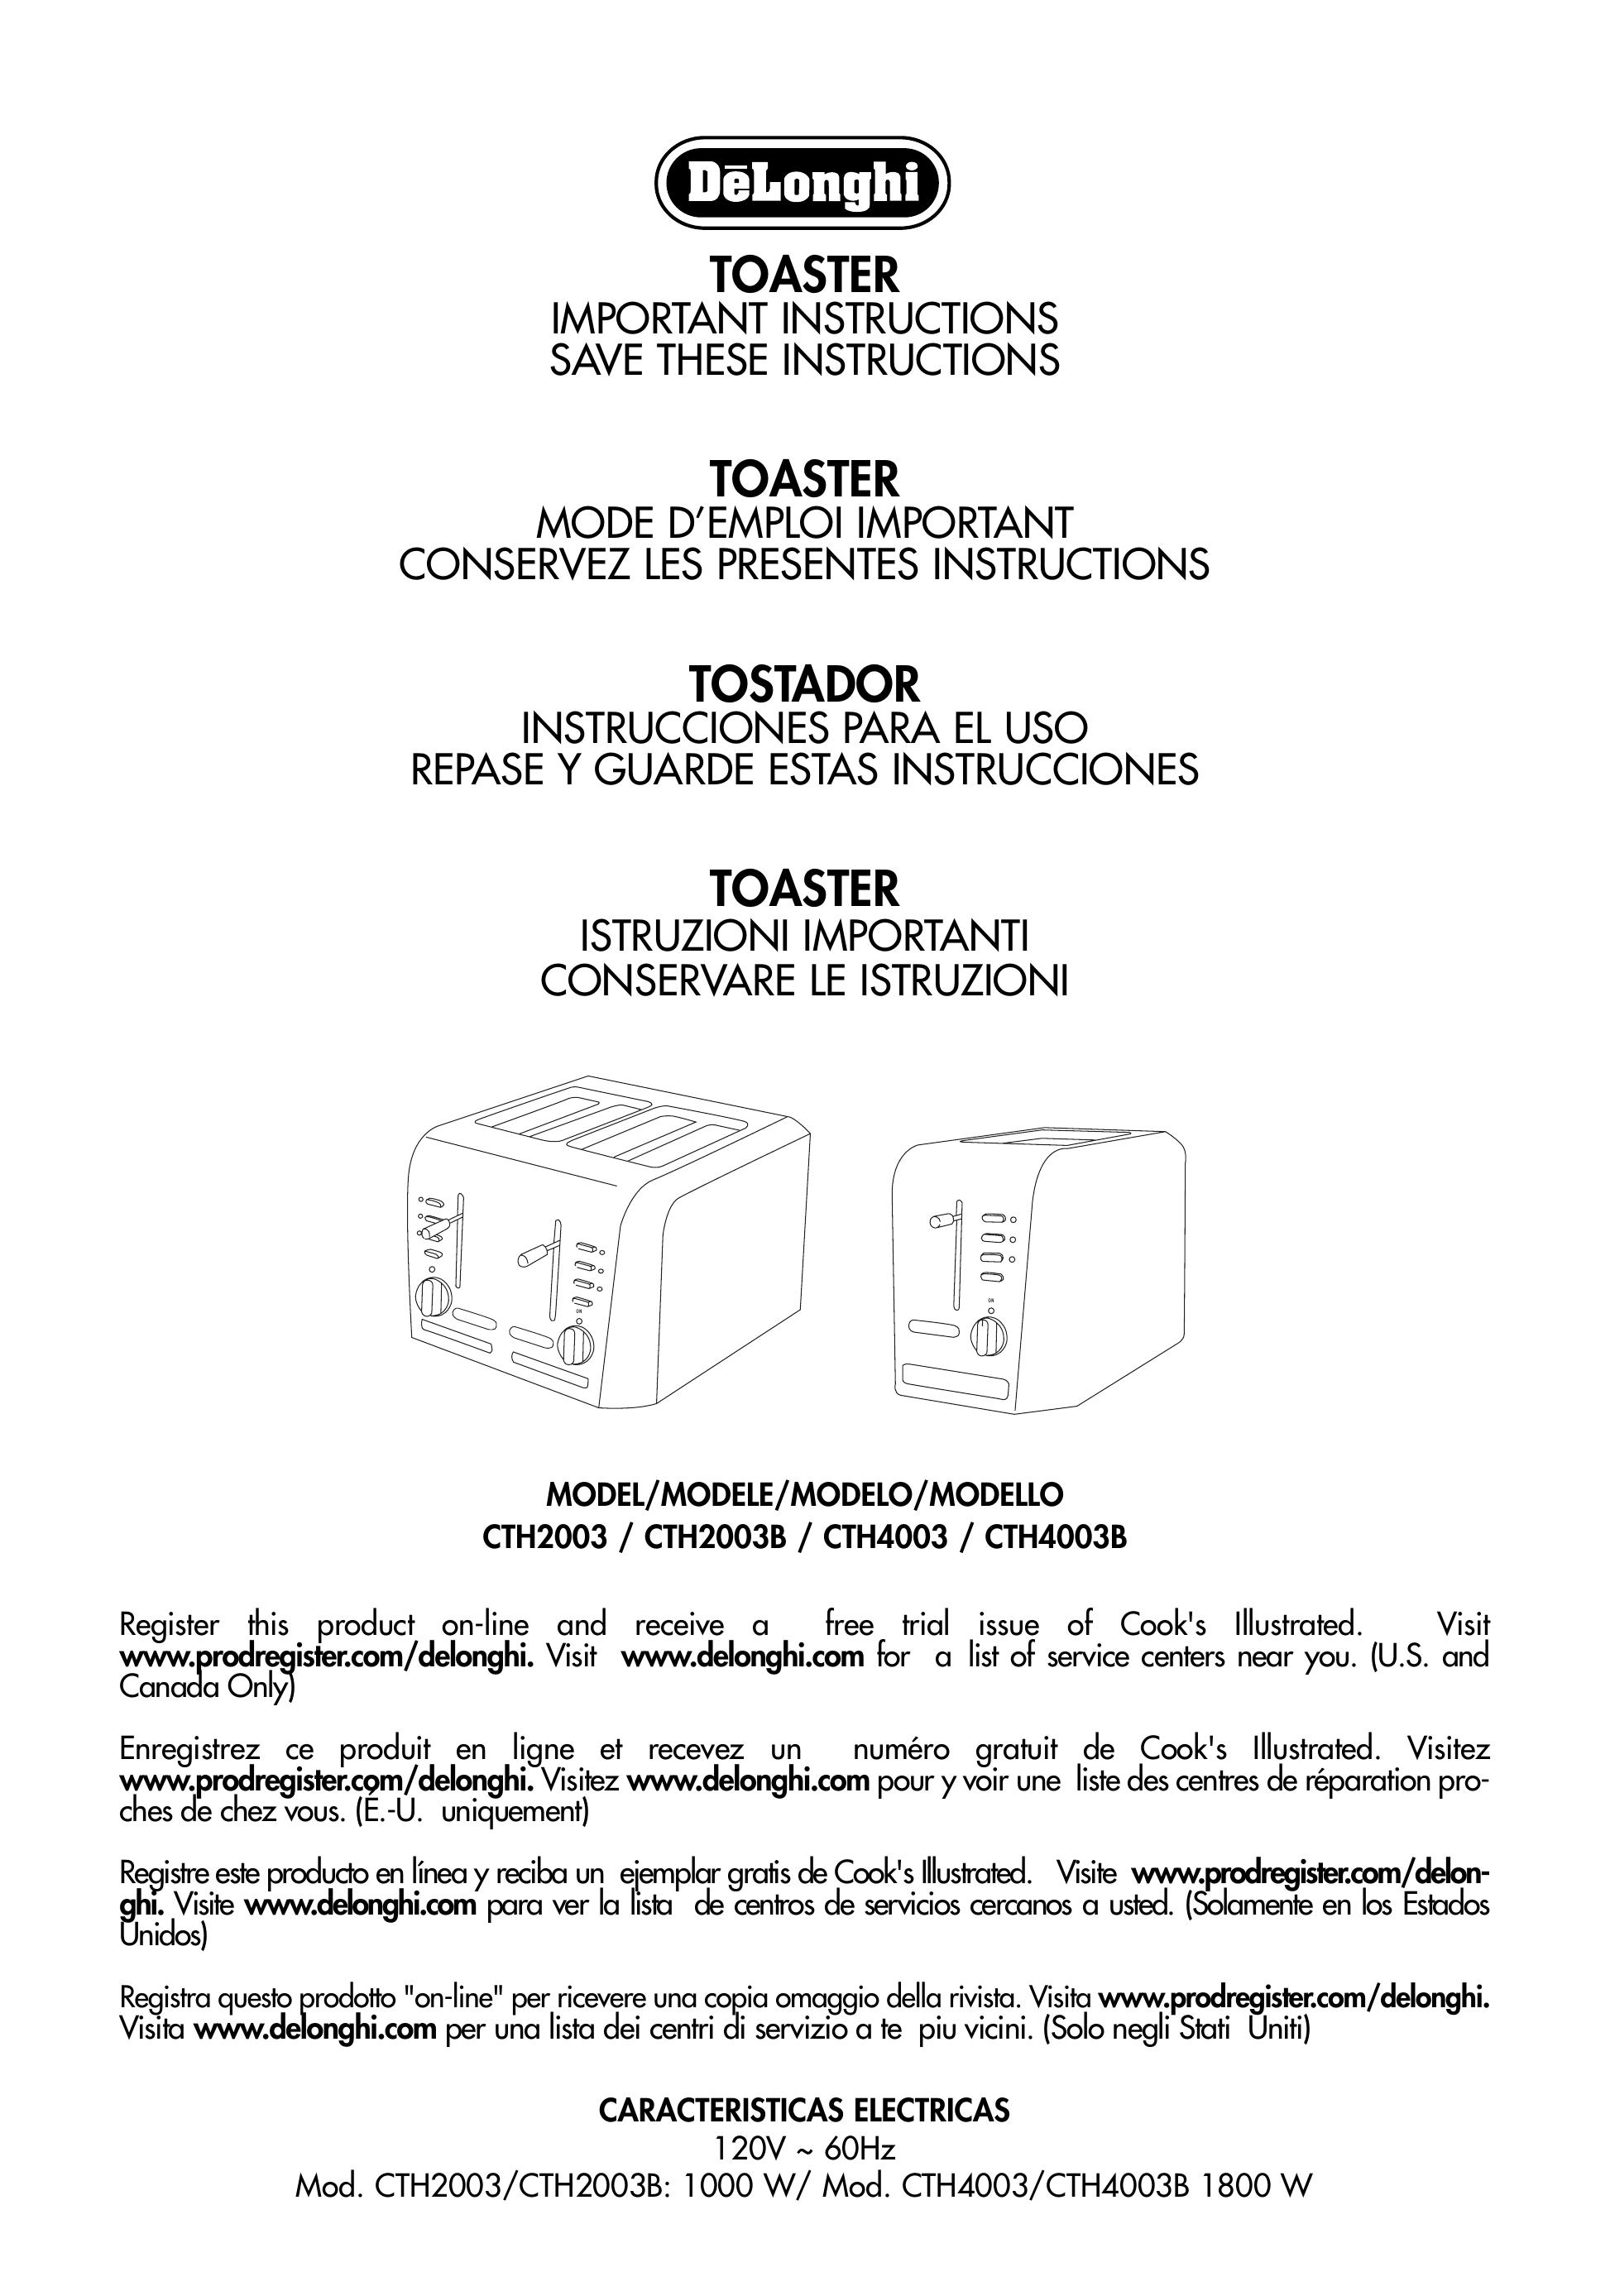 DeLonghi CTH4003B Toaster User Manual